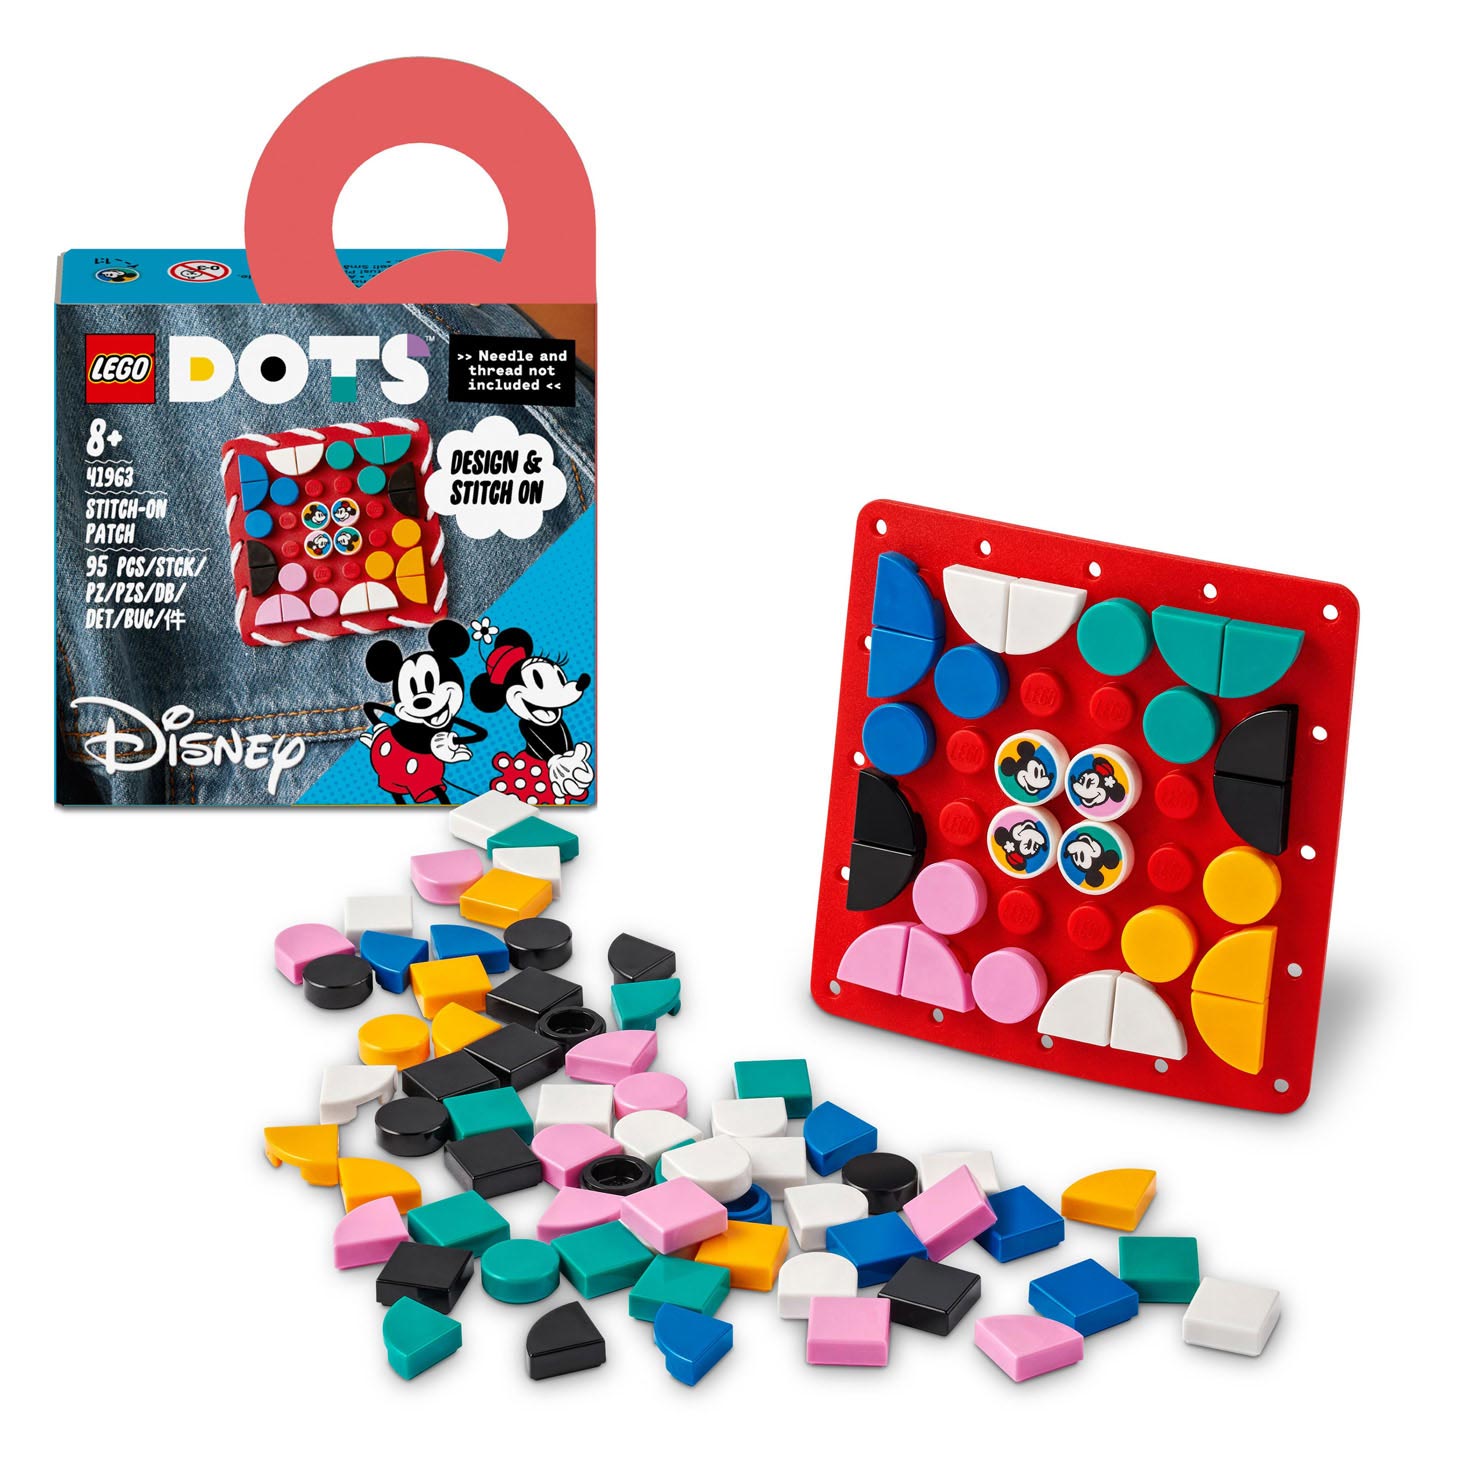 LEGO DOTS 41963 Micky und Minnie Mouse: Aufnäher